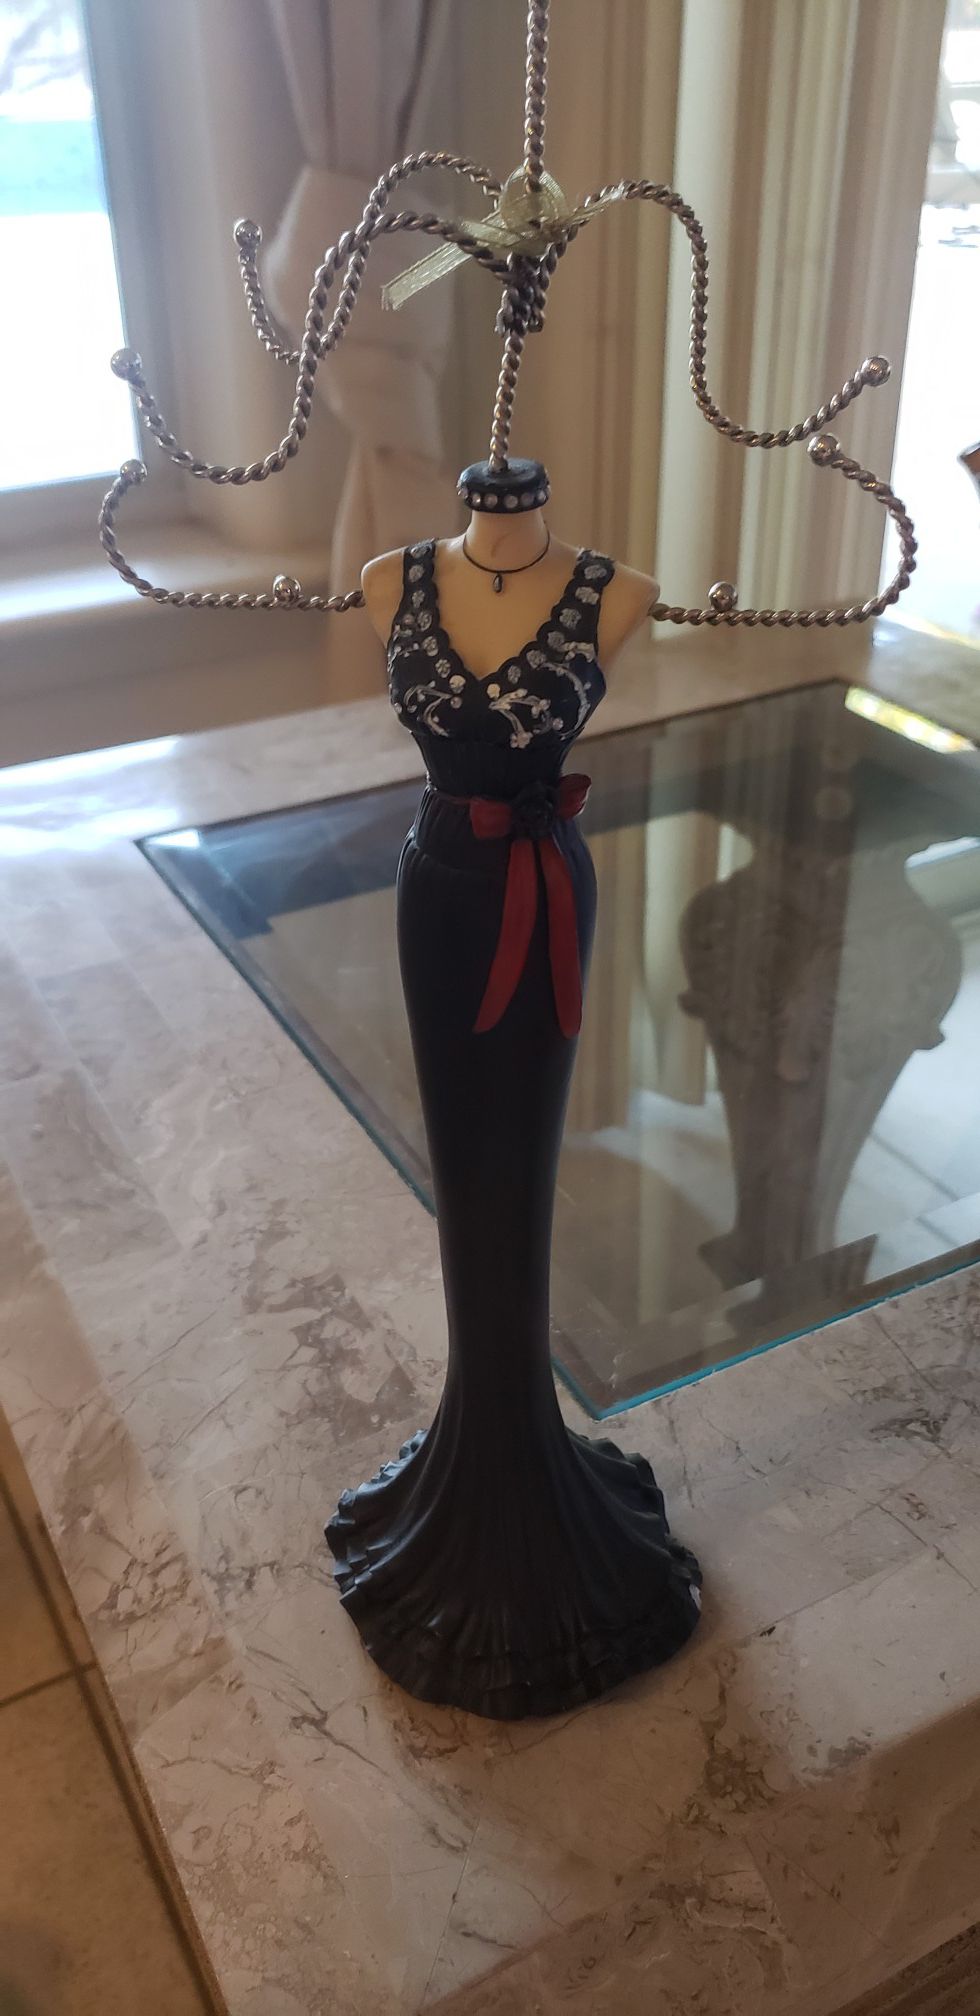 Jewelery / necklace holder